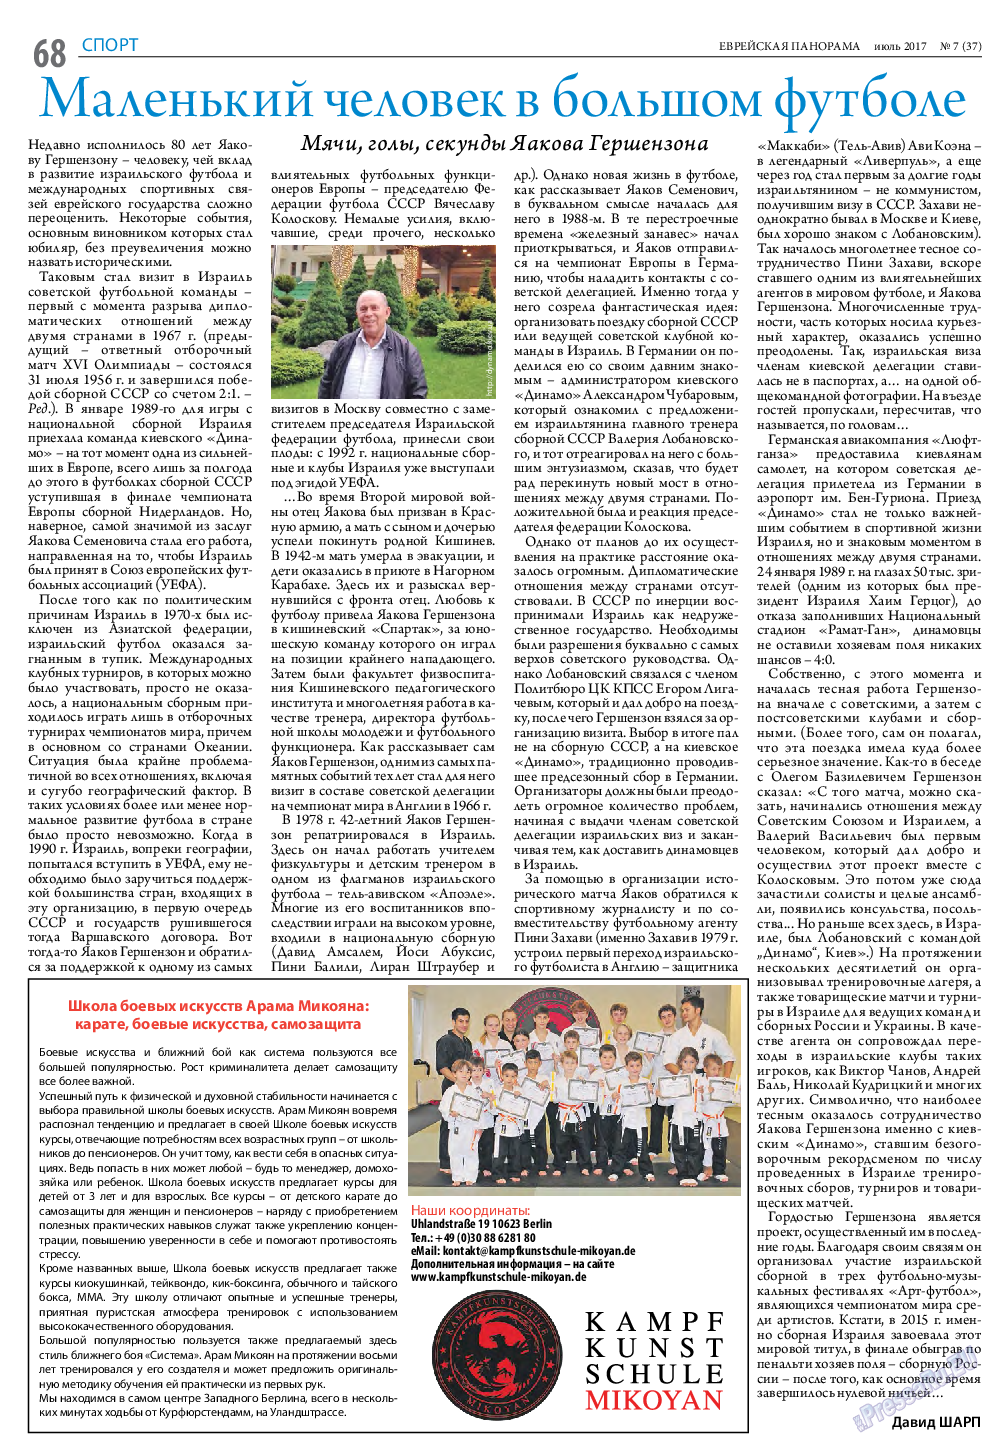 Еврейская панорама, газета. 2017 №7 стр.68